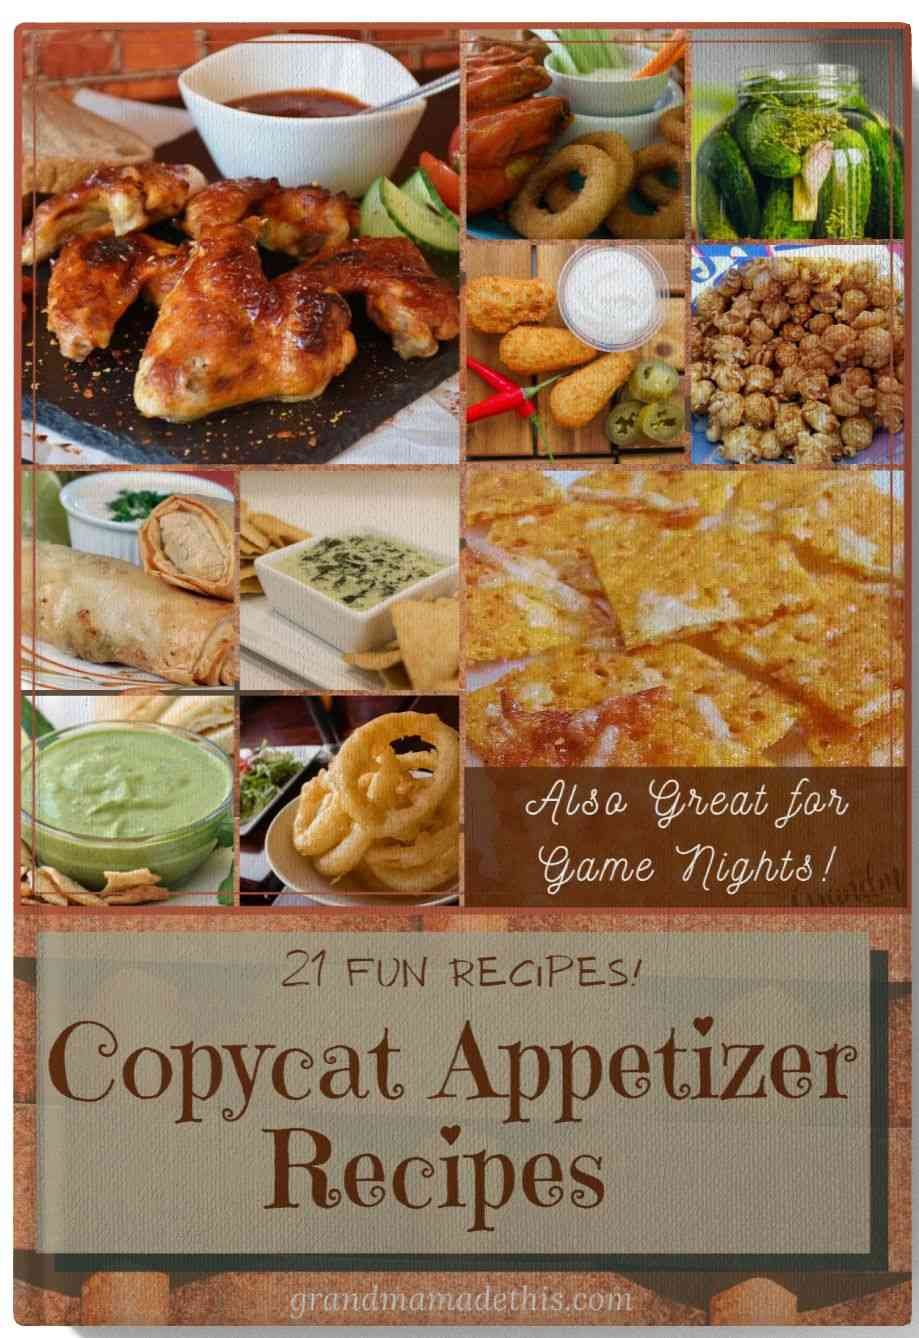 Copycat Appetizers ebook 4